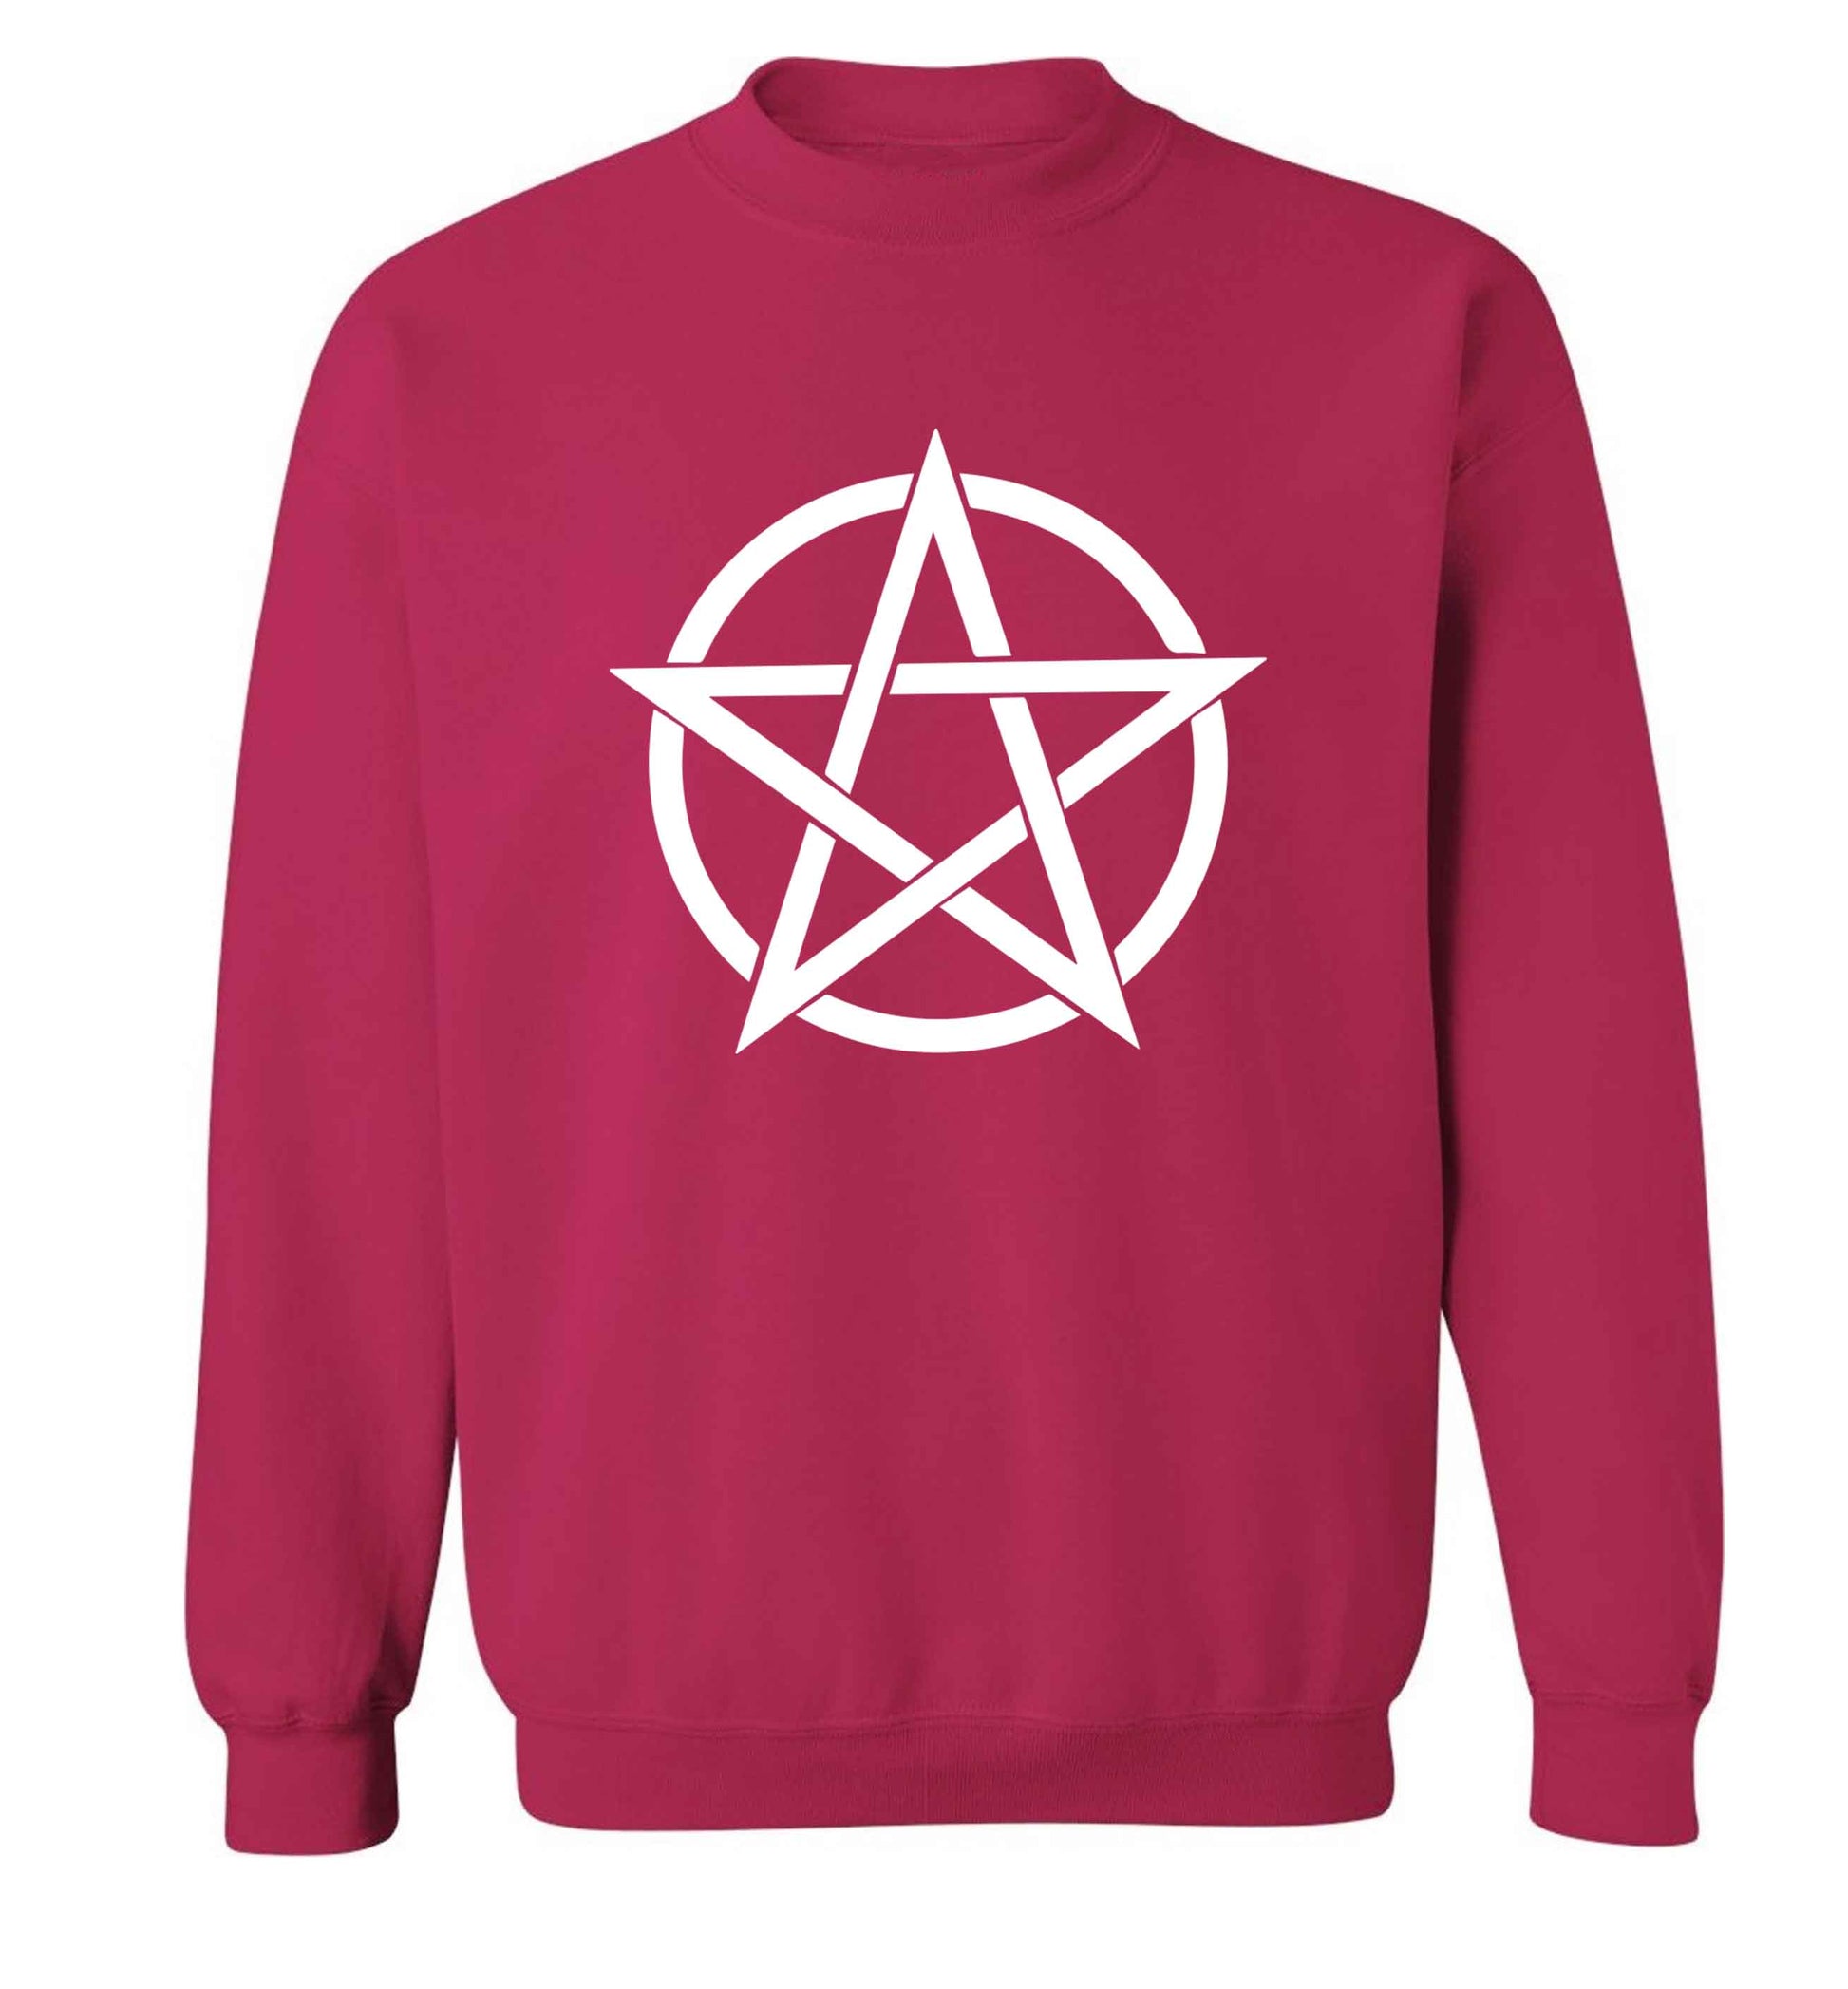 Pentagram symbol adult's unisex pink sweater 2XL